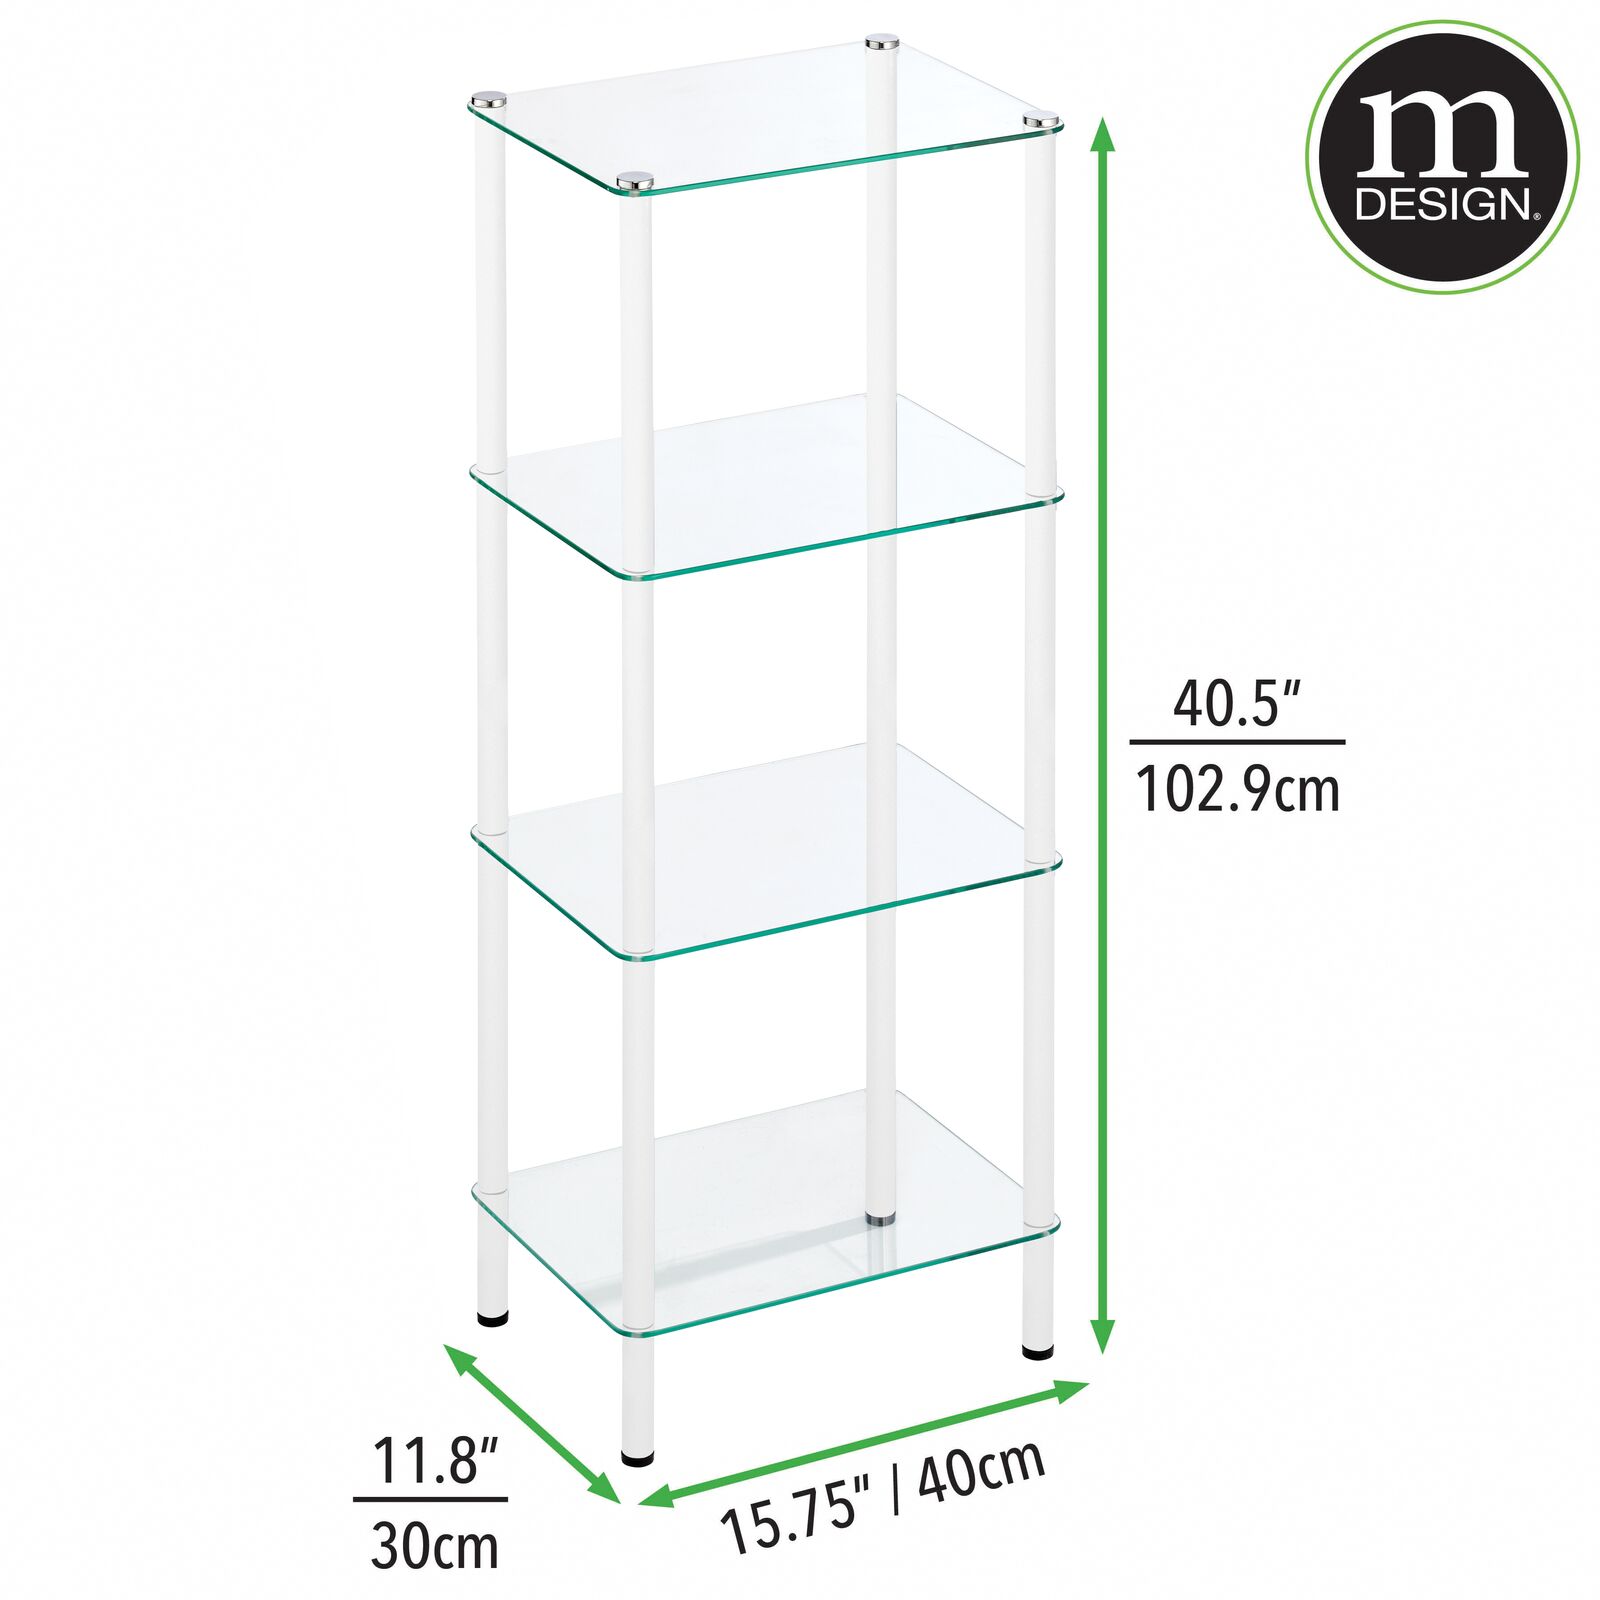 mDesign Tall 4-Tier Glass and Metal Freestanding Shelf Organizer Display Unit Narrow Shelves for Bathroom, Kitchen, Bedroom, Office Open Shelvin - 3